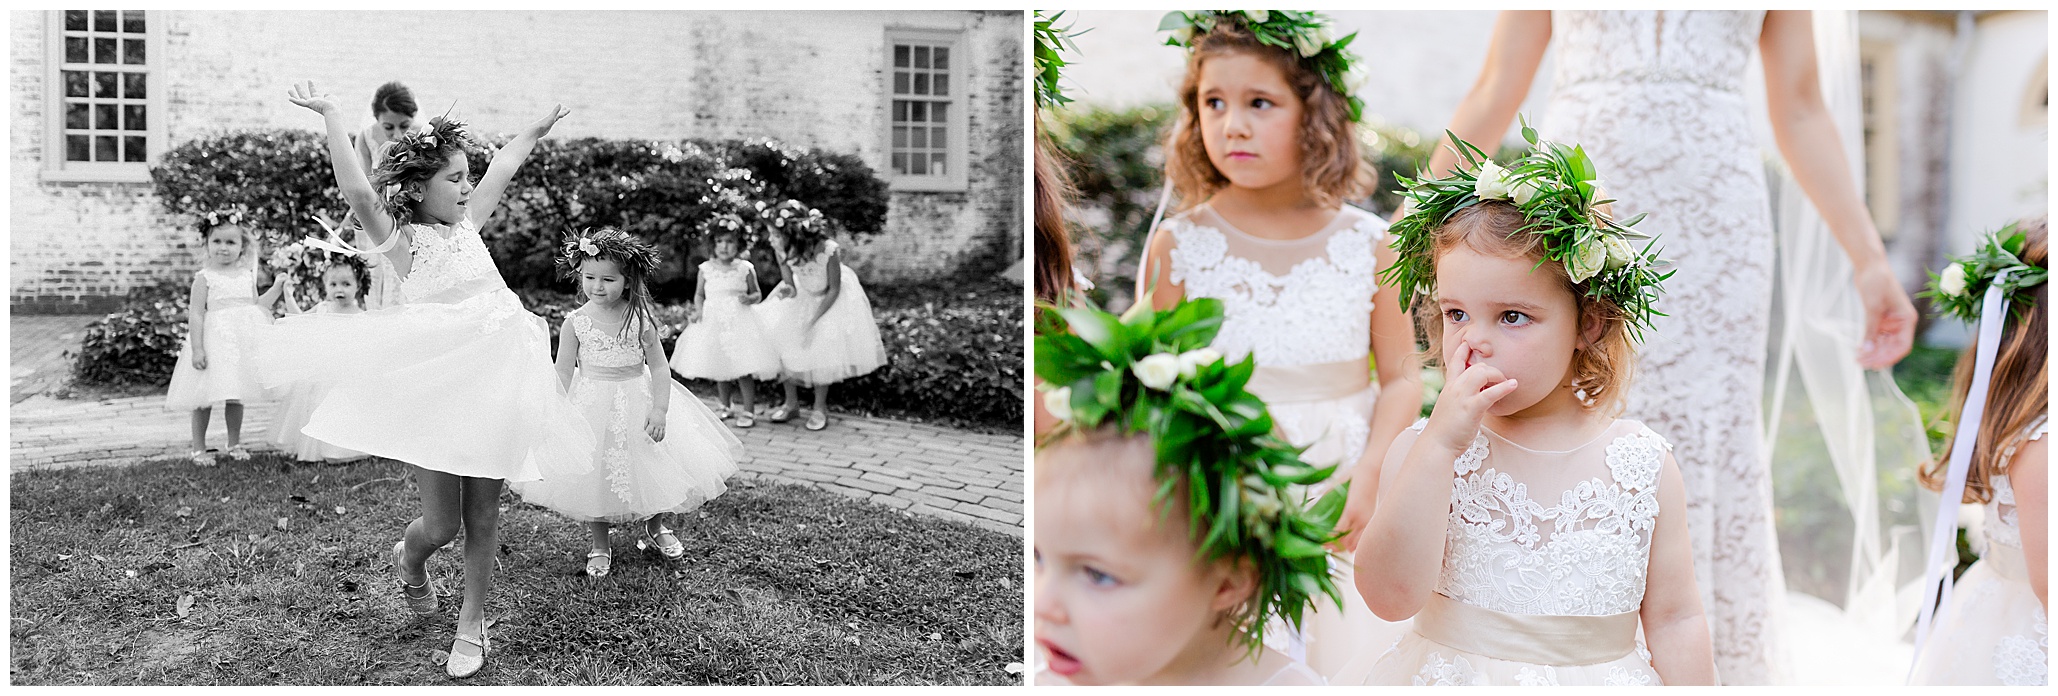 Flower girls at wedding Luke and Ashley Photography 